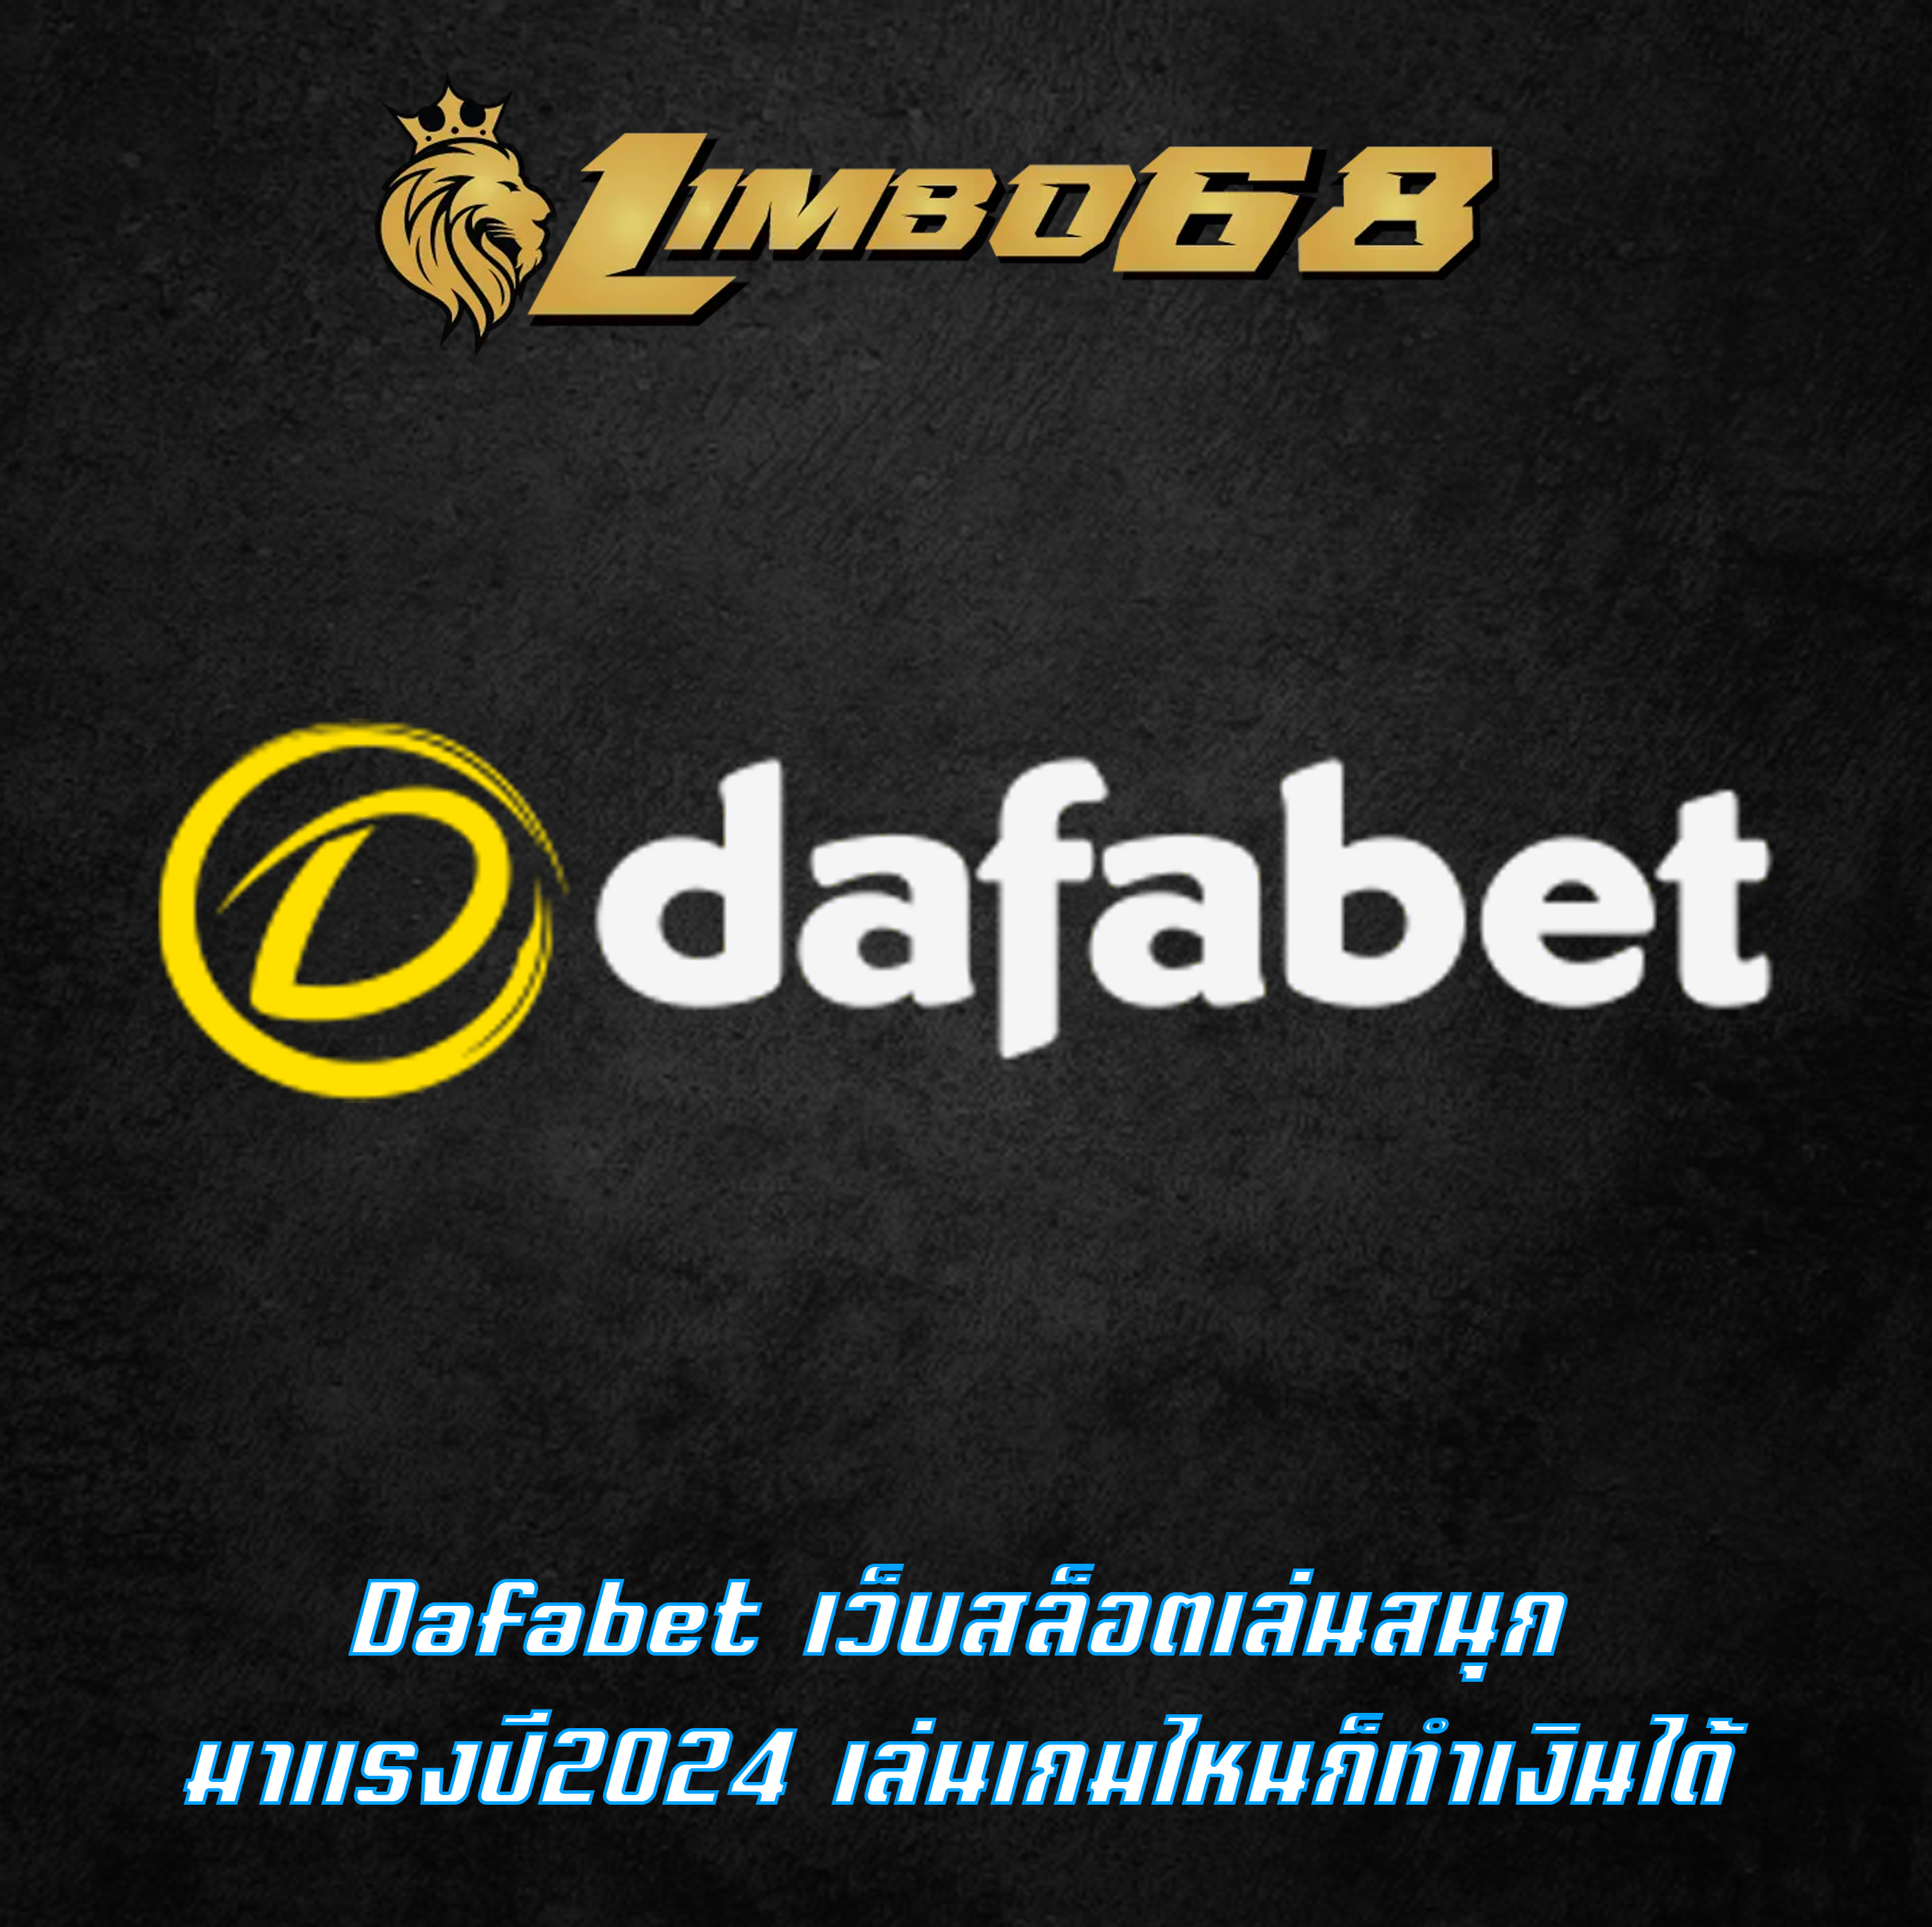 Dafabet เว็บสล็อตเล่นสนุก มาแรงปี2024 เล่นเกมไหนก็ทำเงินได้